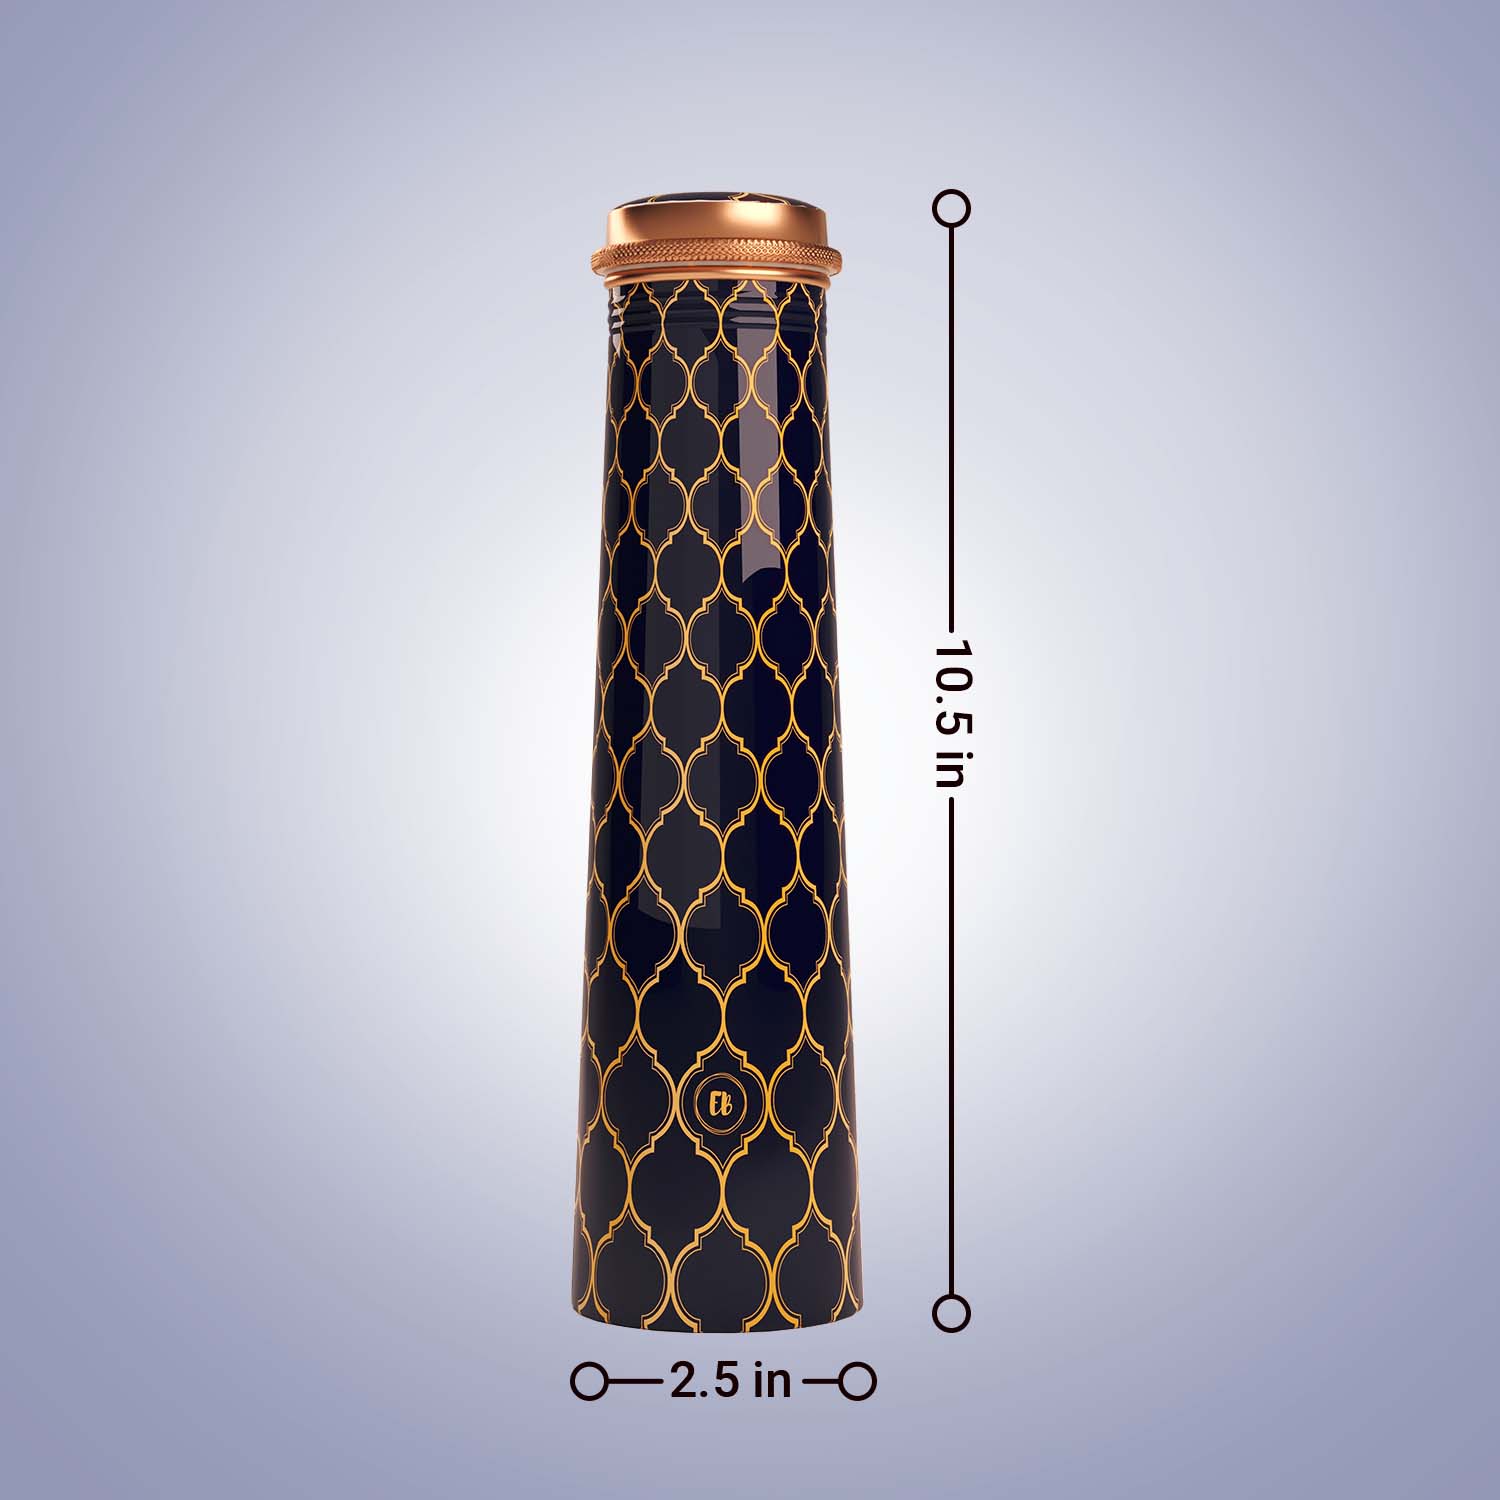 Navy Blue Moroccan design copper bottle copper water bottle 750ml printed copper bottle benefits of copper water #color_navy blue moroccan